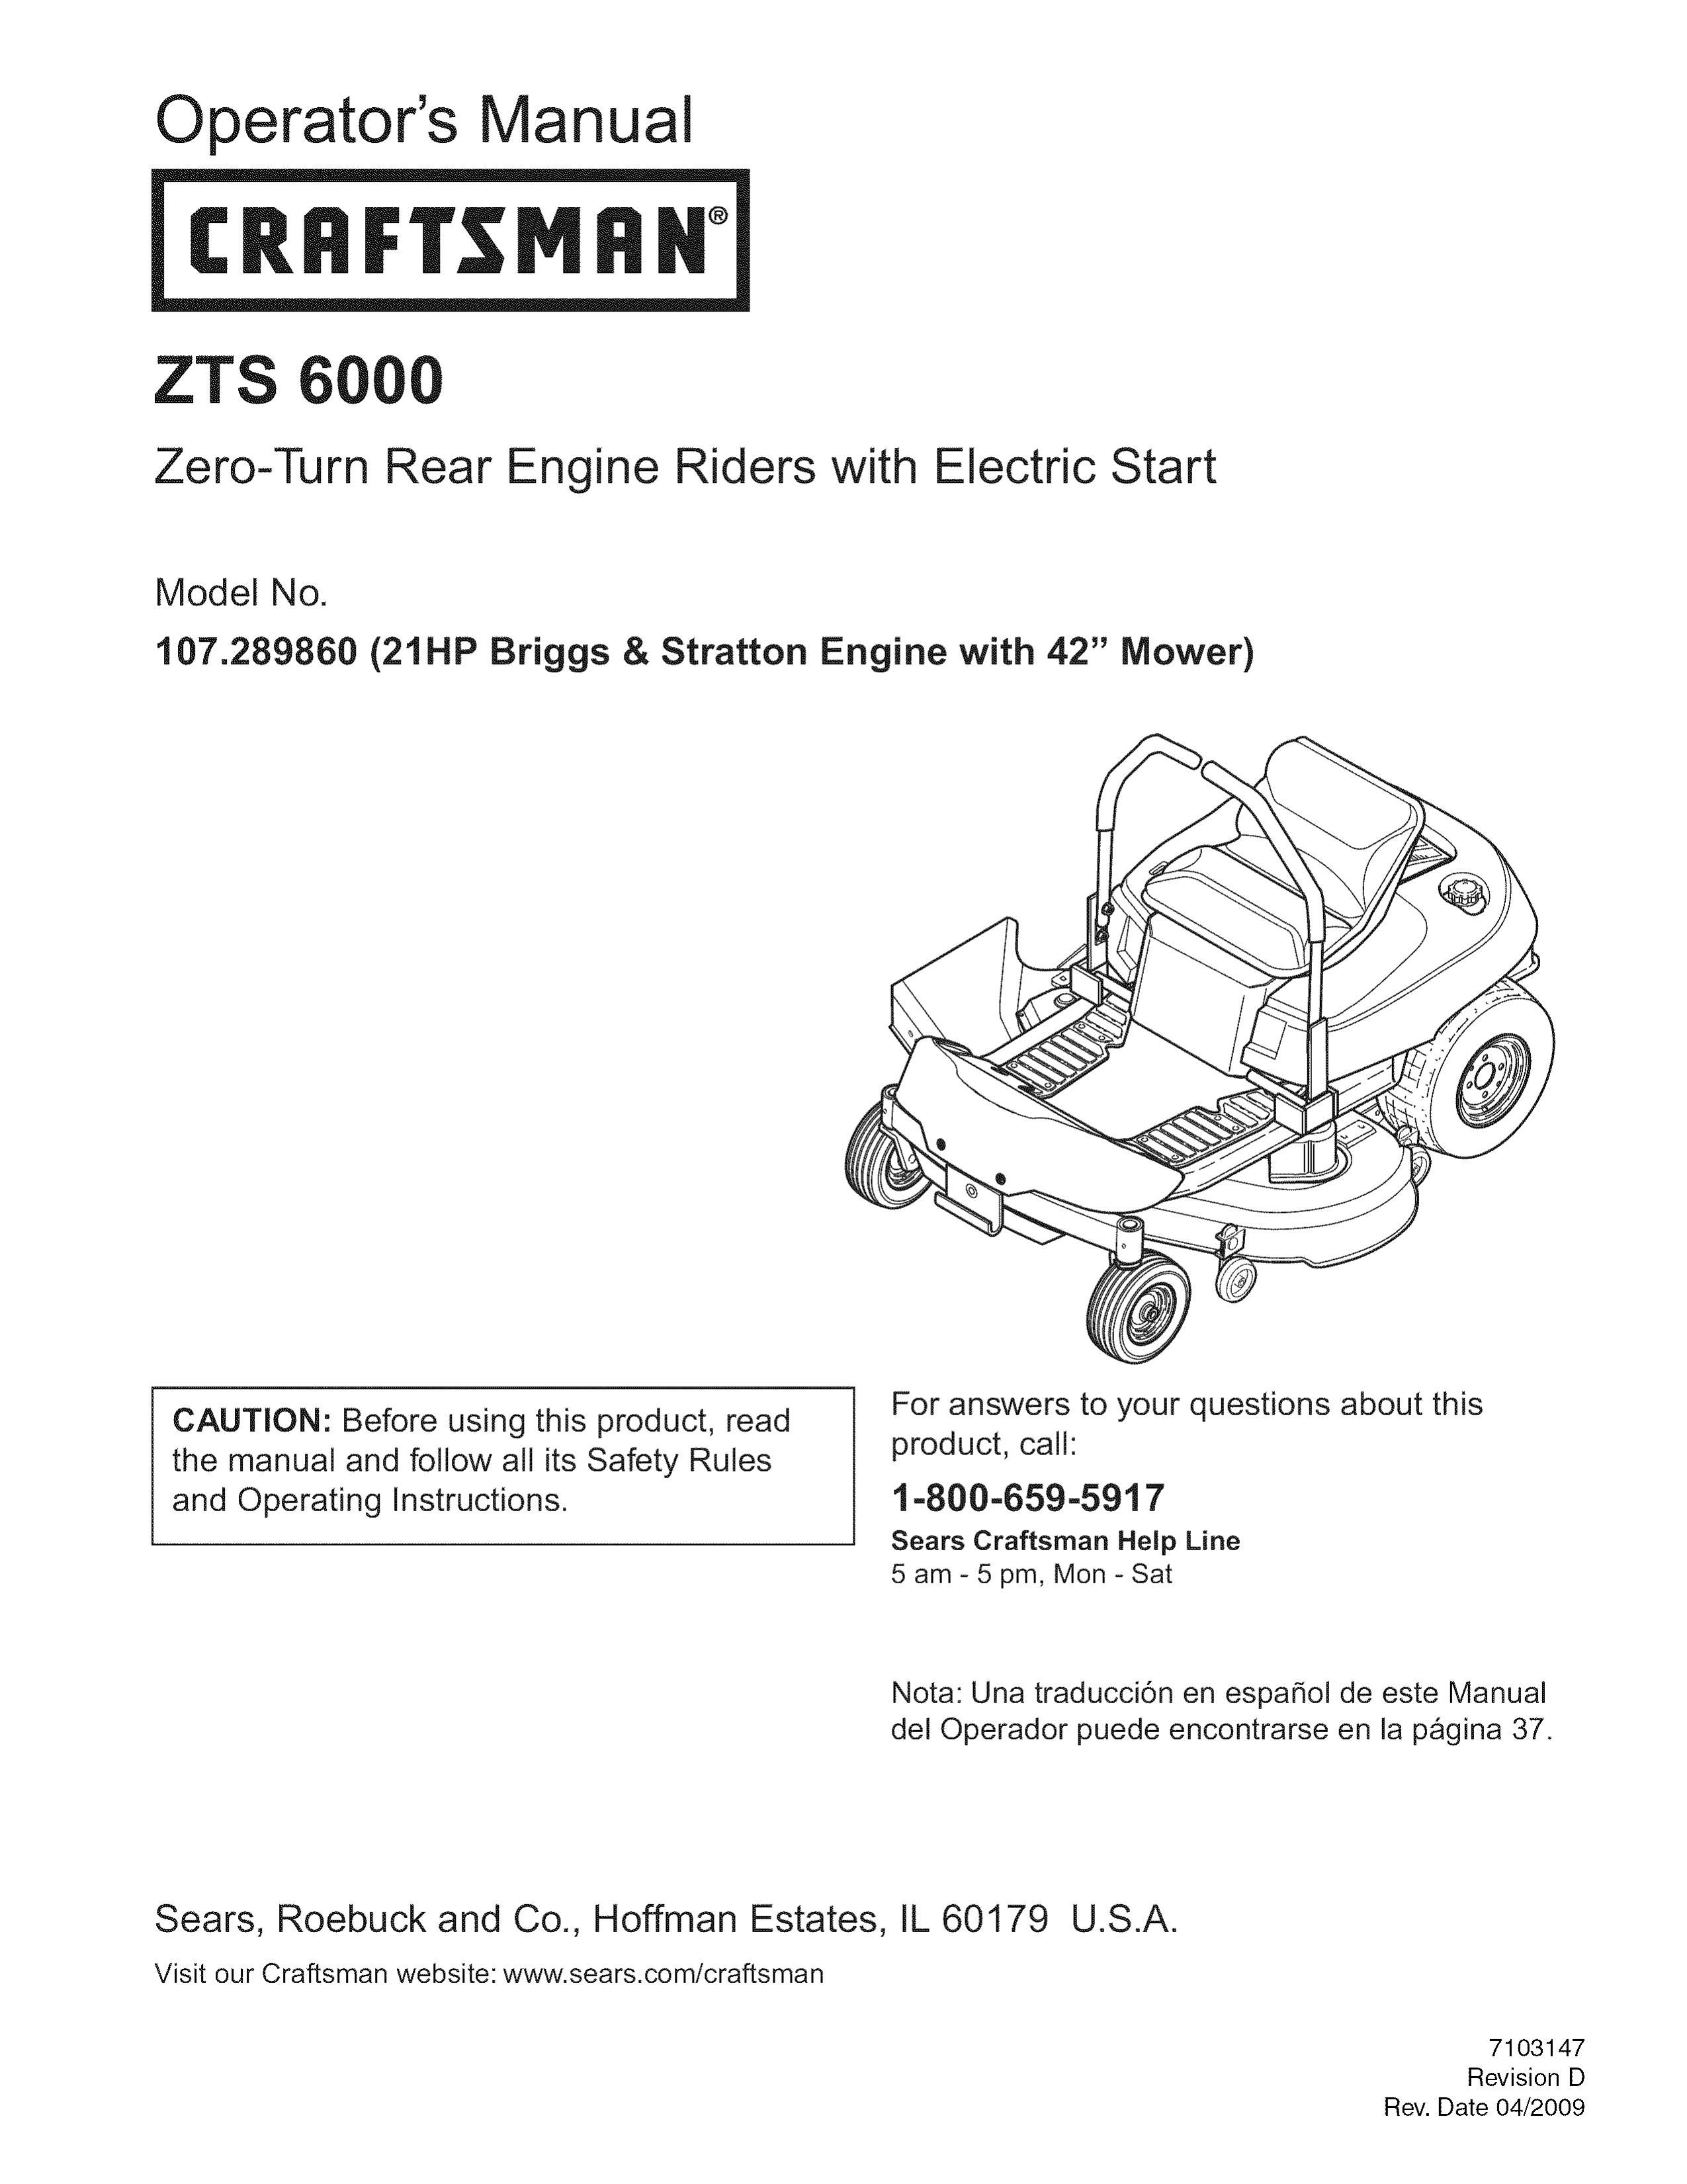 Craftsman 107.289860 Lawn Mower User Manual